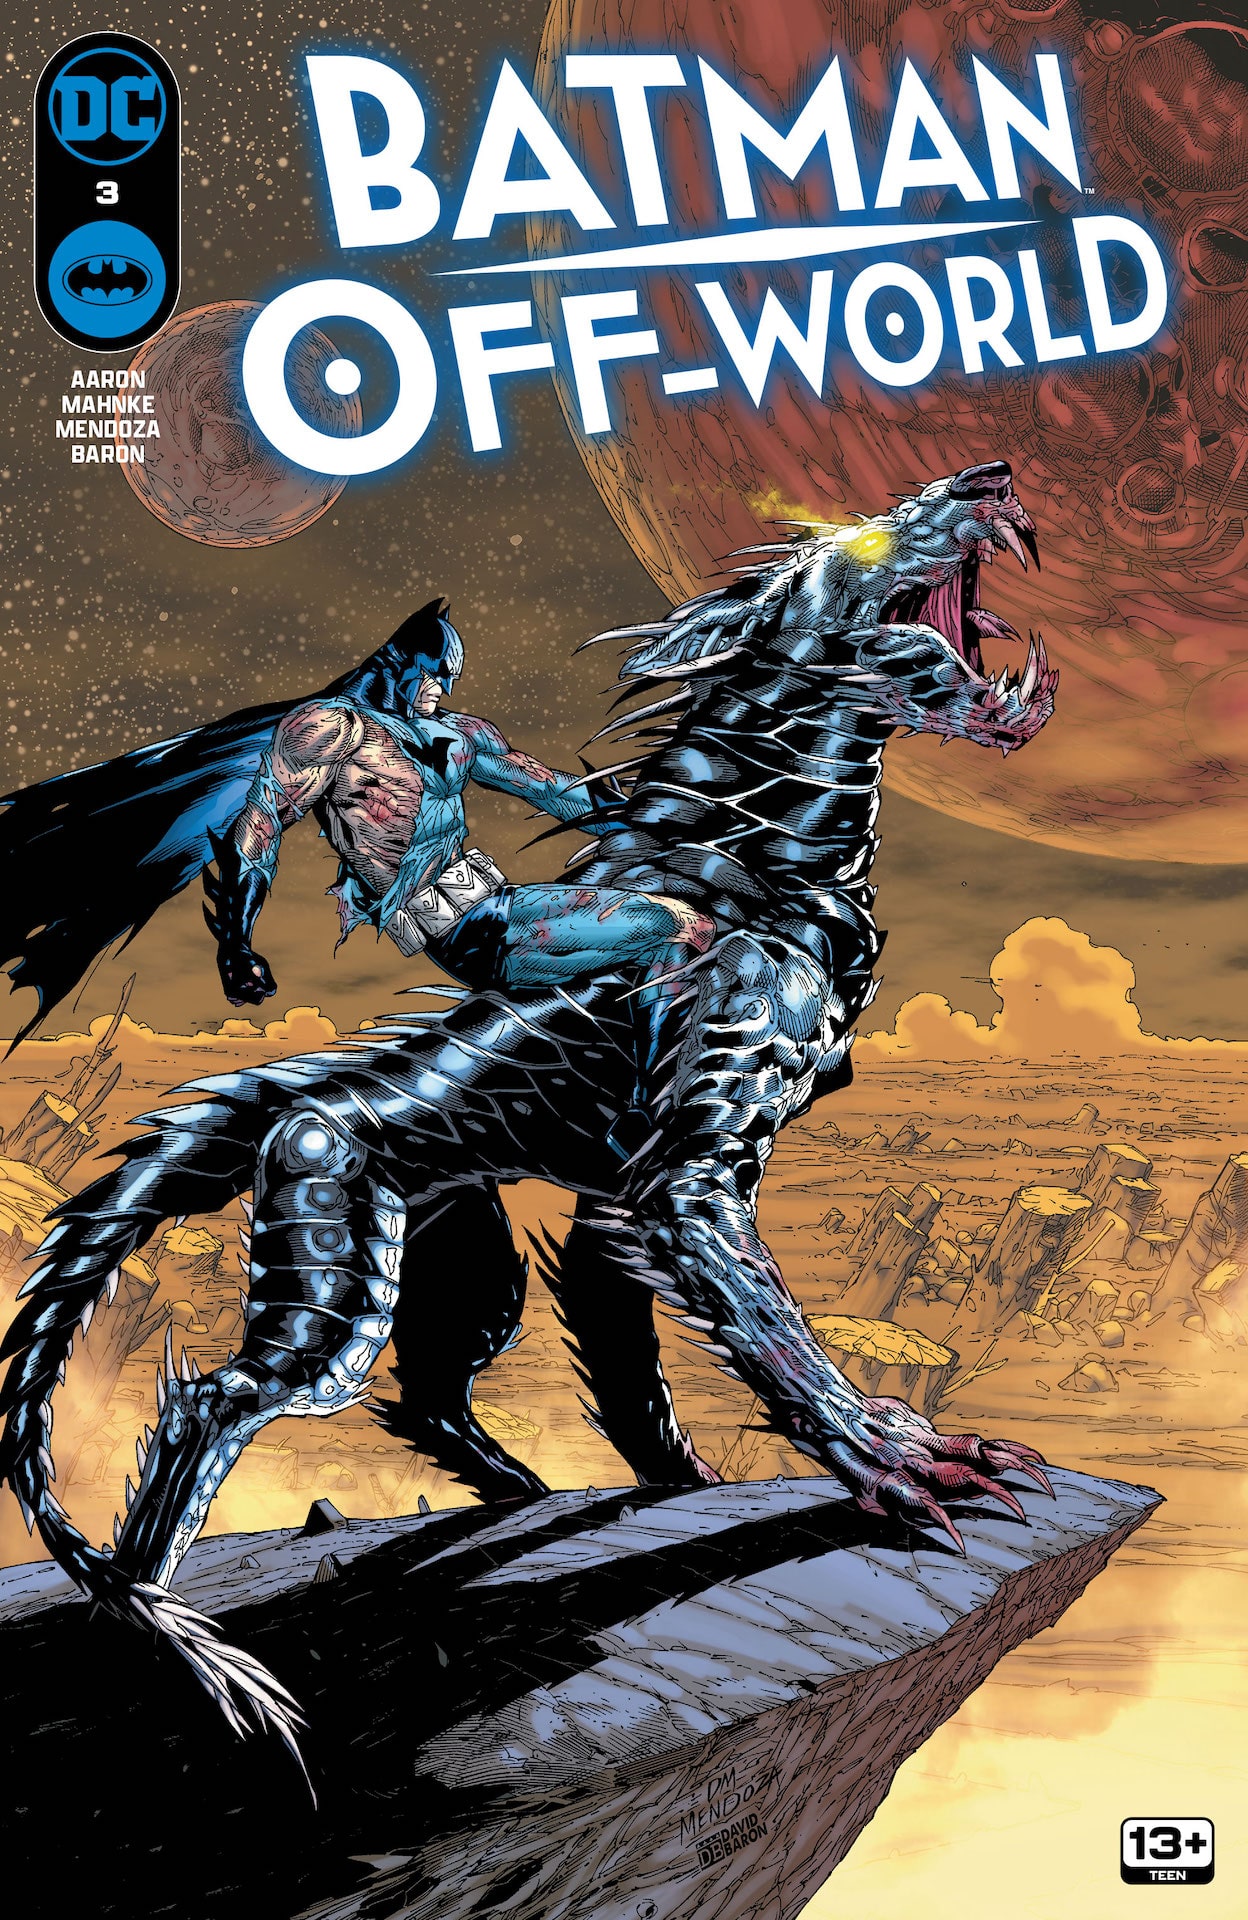 DC Preview: Batman: Off-World #3